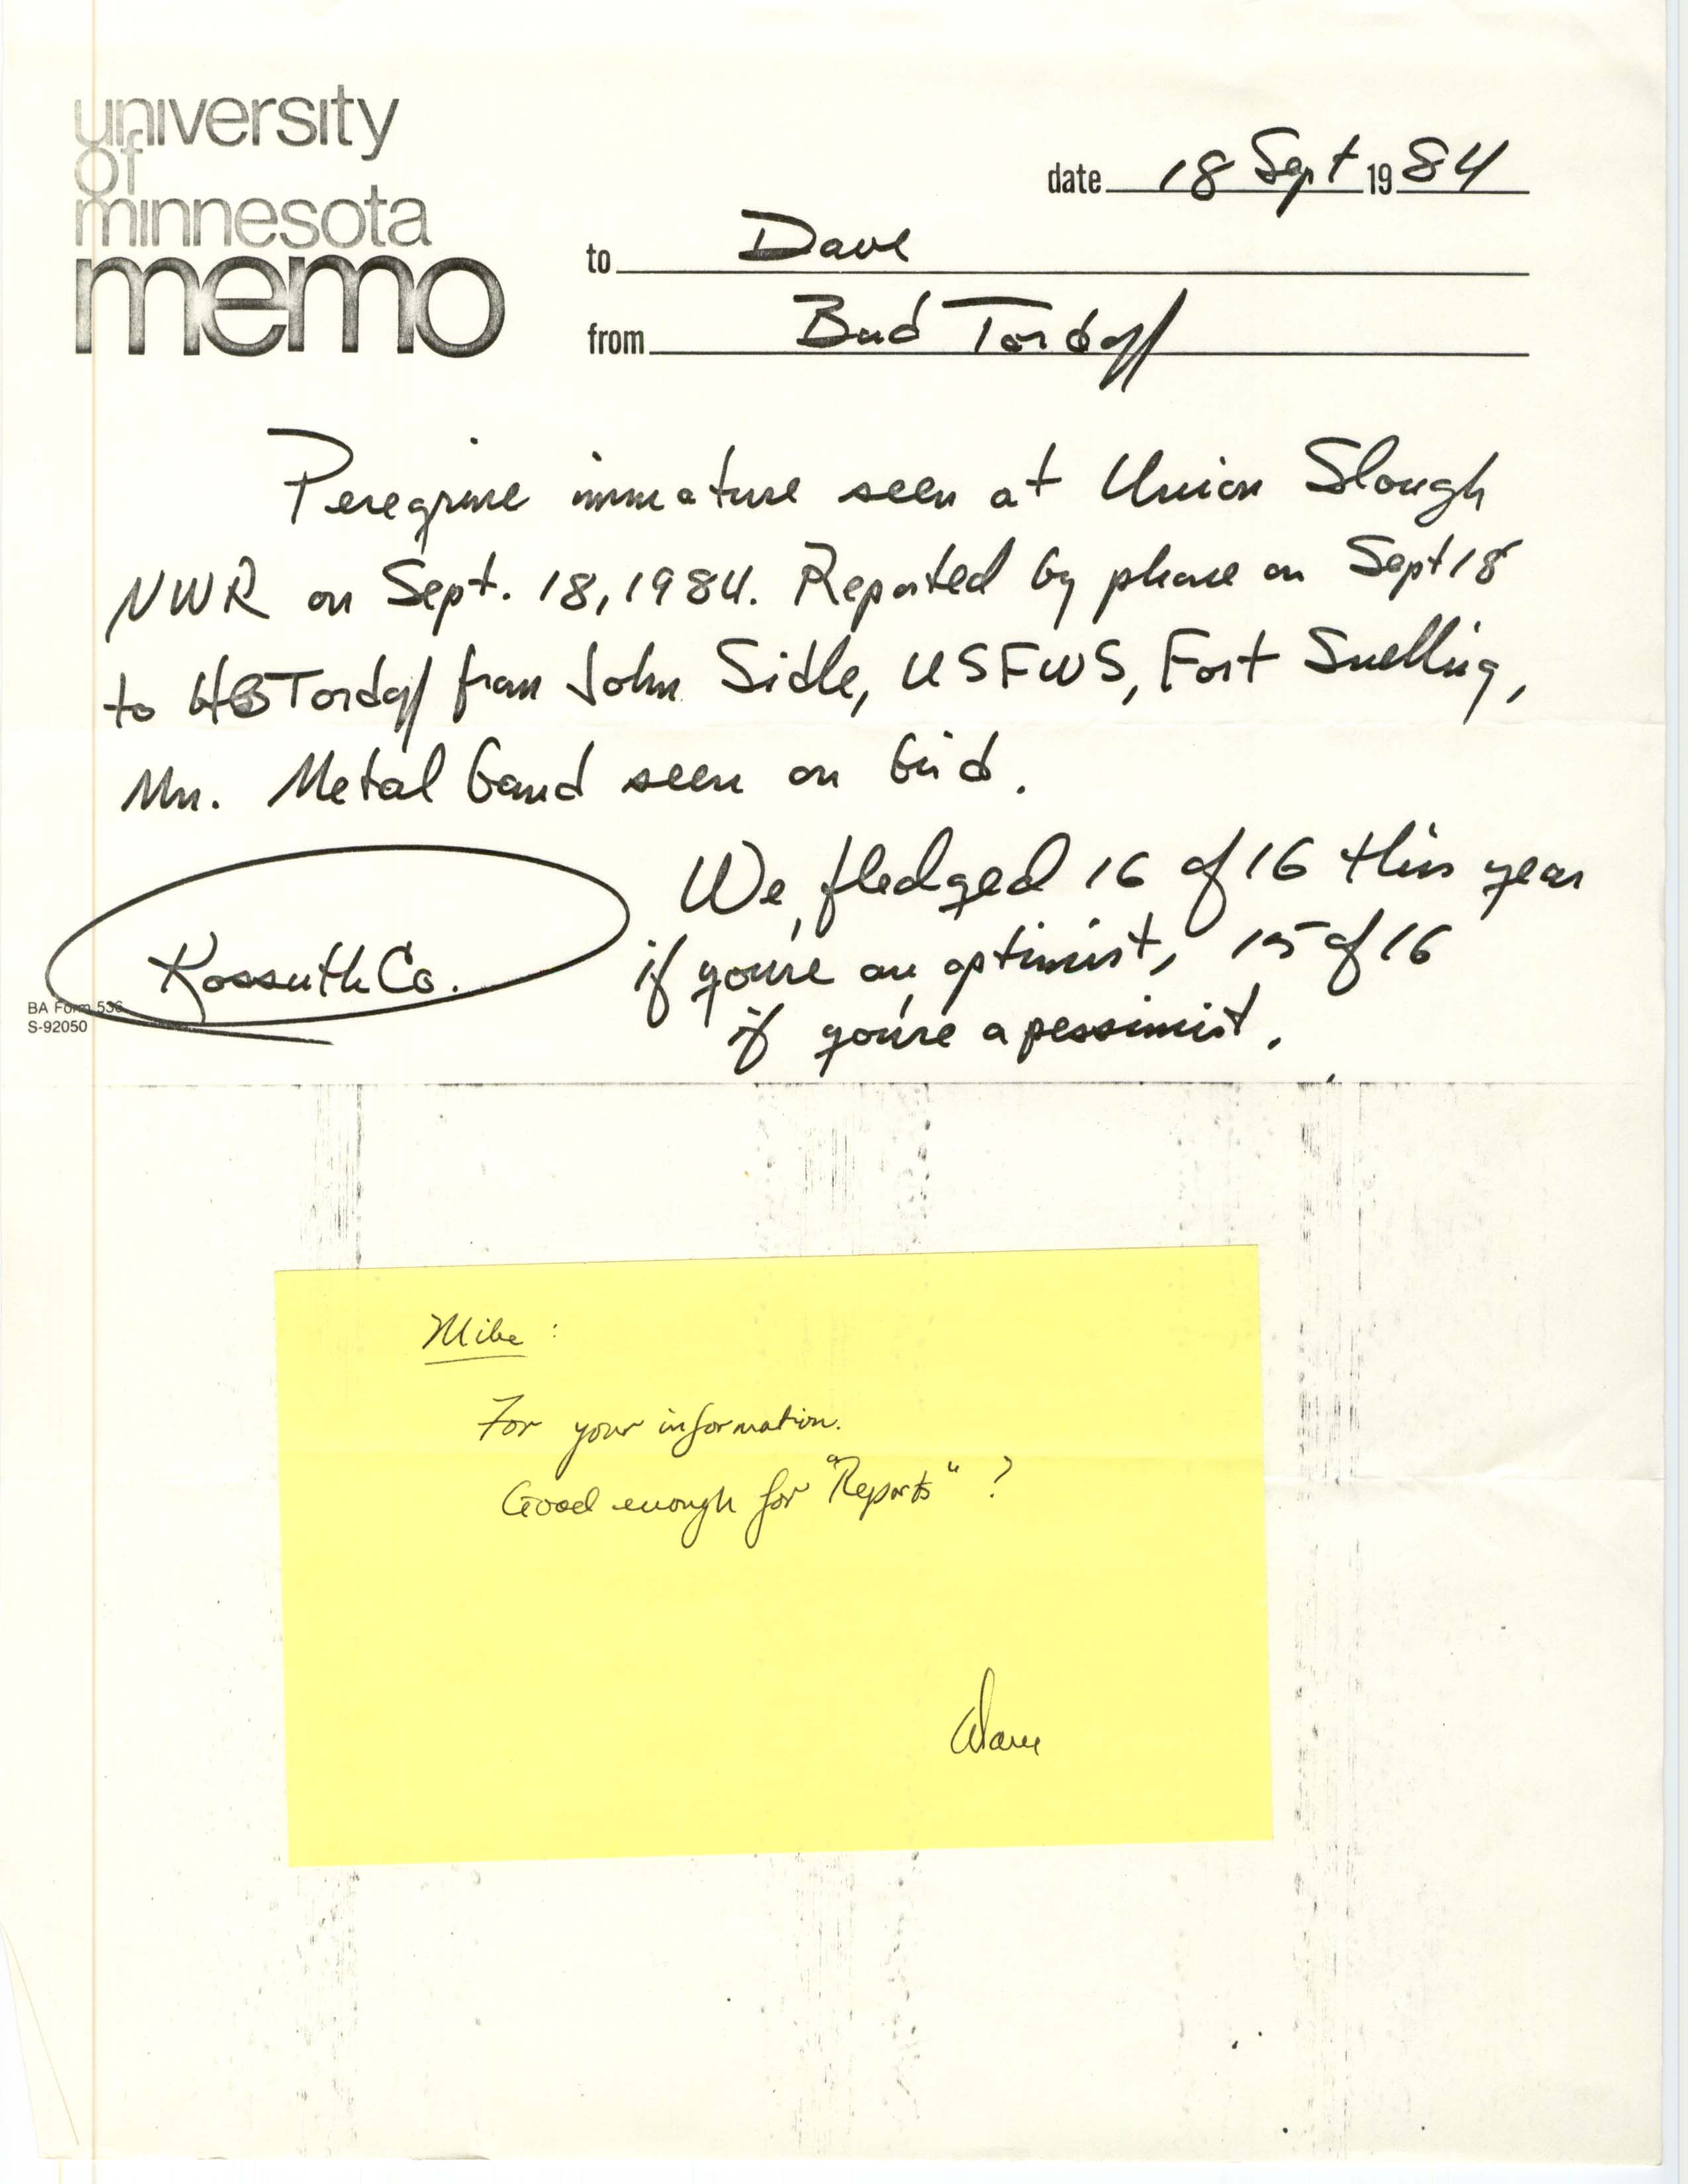 Bud Tordoff memo to Dave regarding Peregrine Falcon sighting, September 18, 1984